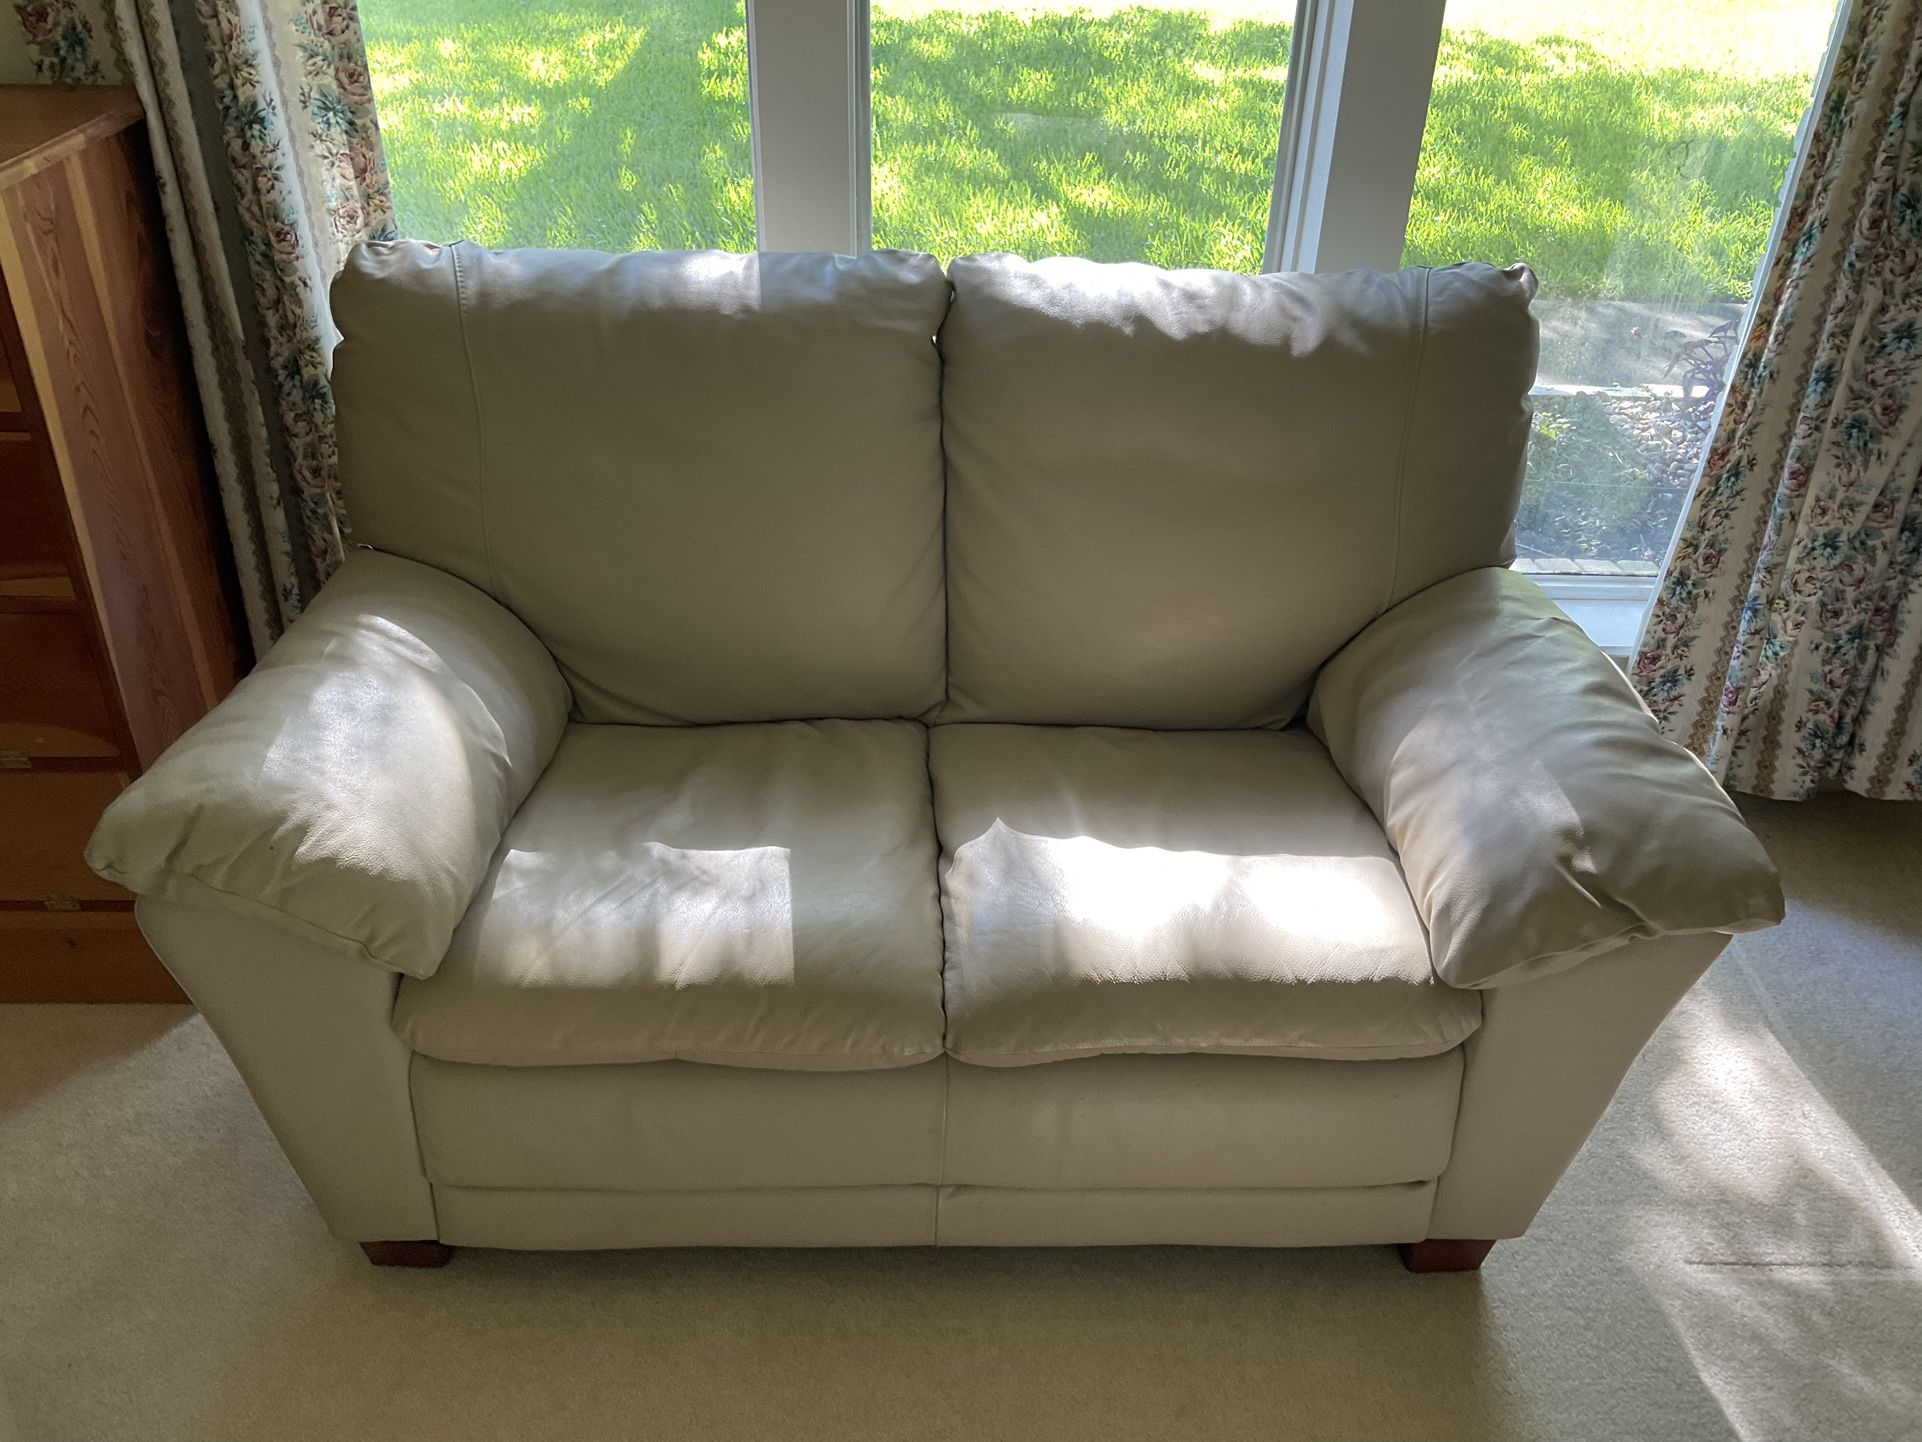 Used Leather Sofa Set - Free To A Good Home